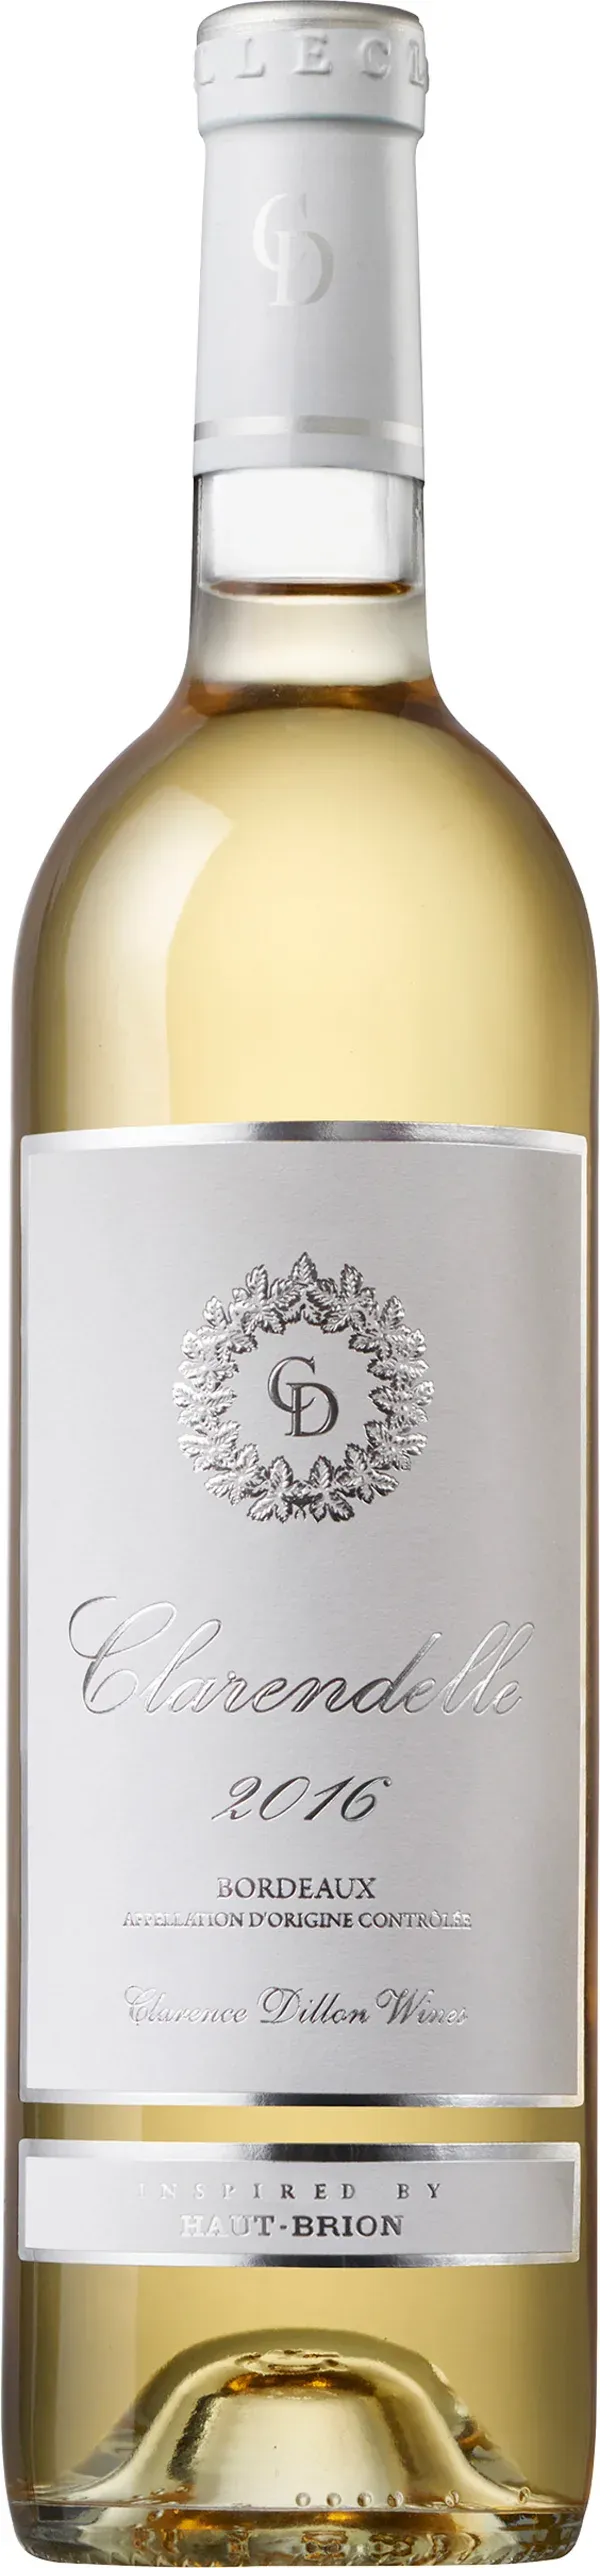 Bottle of Clarendelle Bordeaux Blancwith label visible